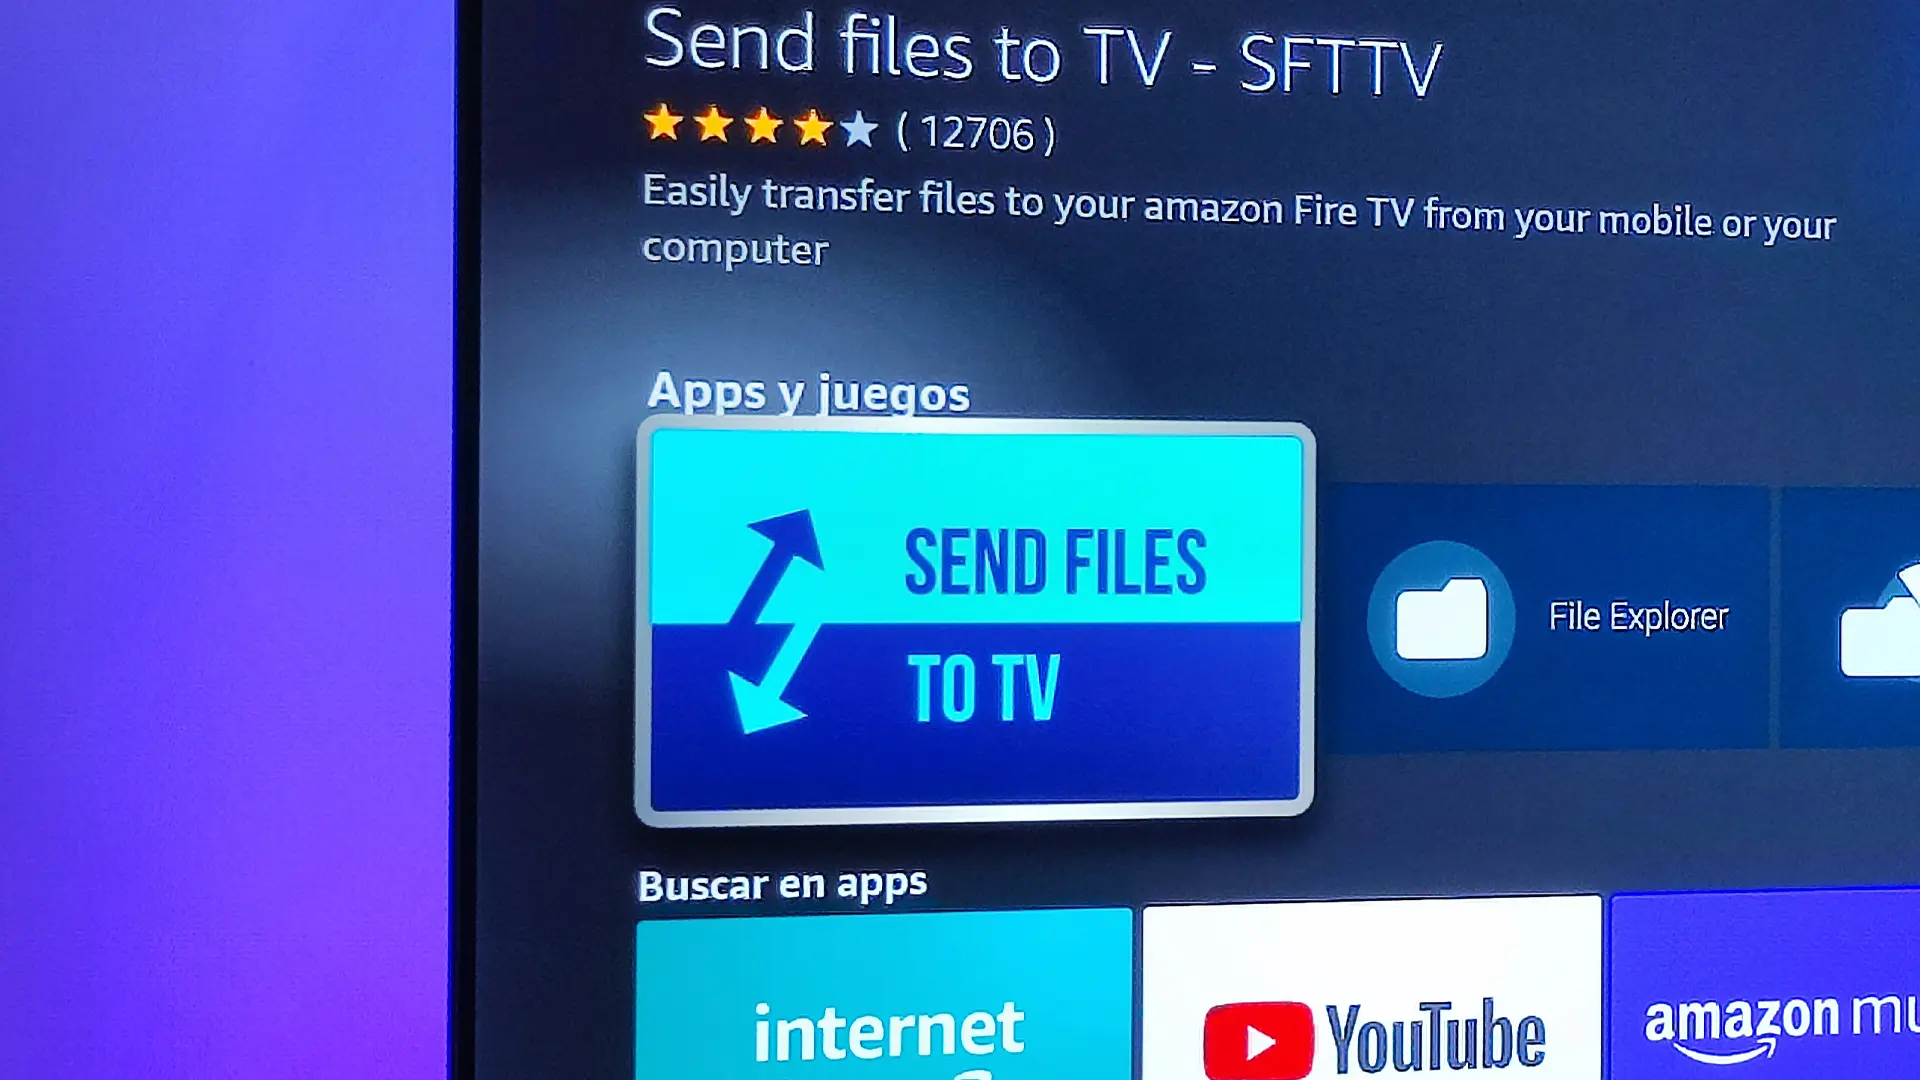 La guía de Send Files to TV SFTTV para enviar archivos a tu Fire TV de forma inalámbrica